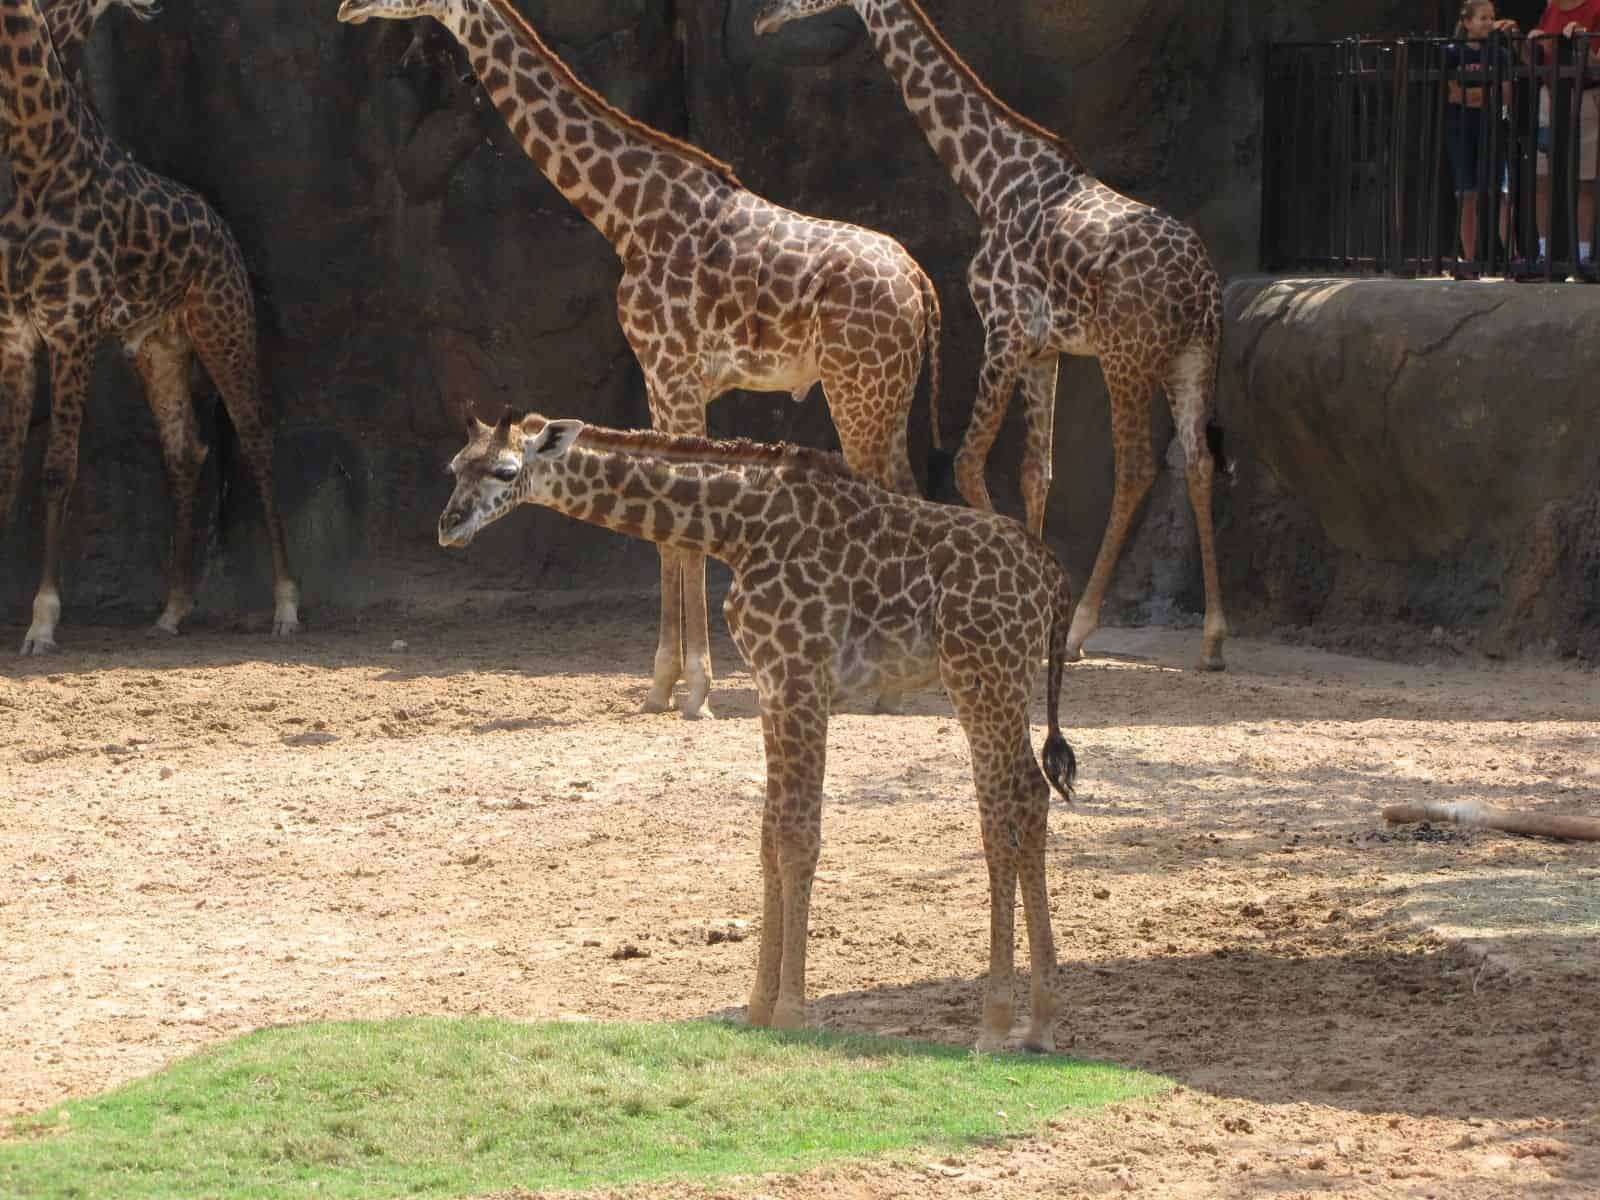 Giraffes at Houston Zoo in Houston TX